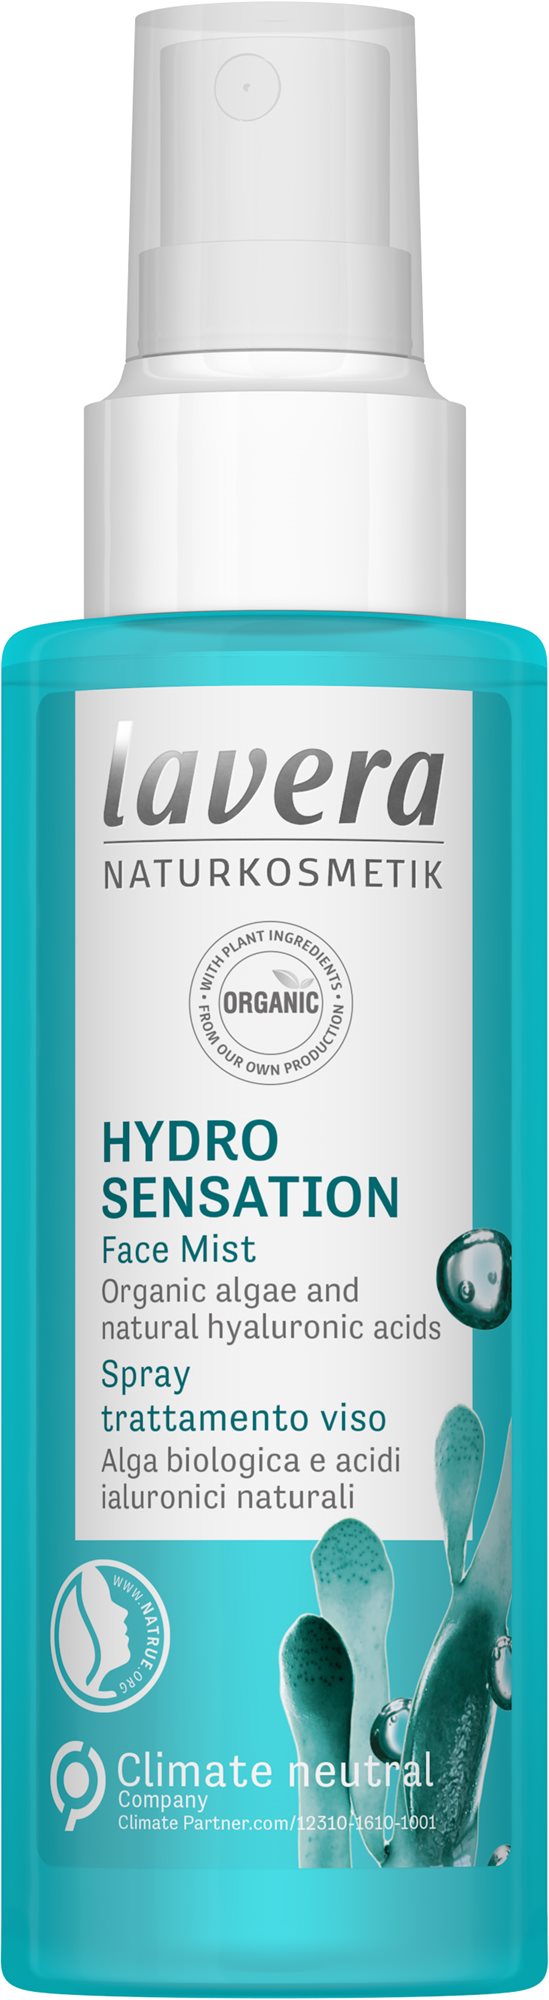 LAVERA Hydro Sensation Face Mist 100 ml